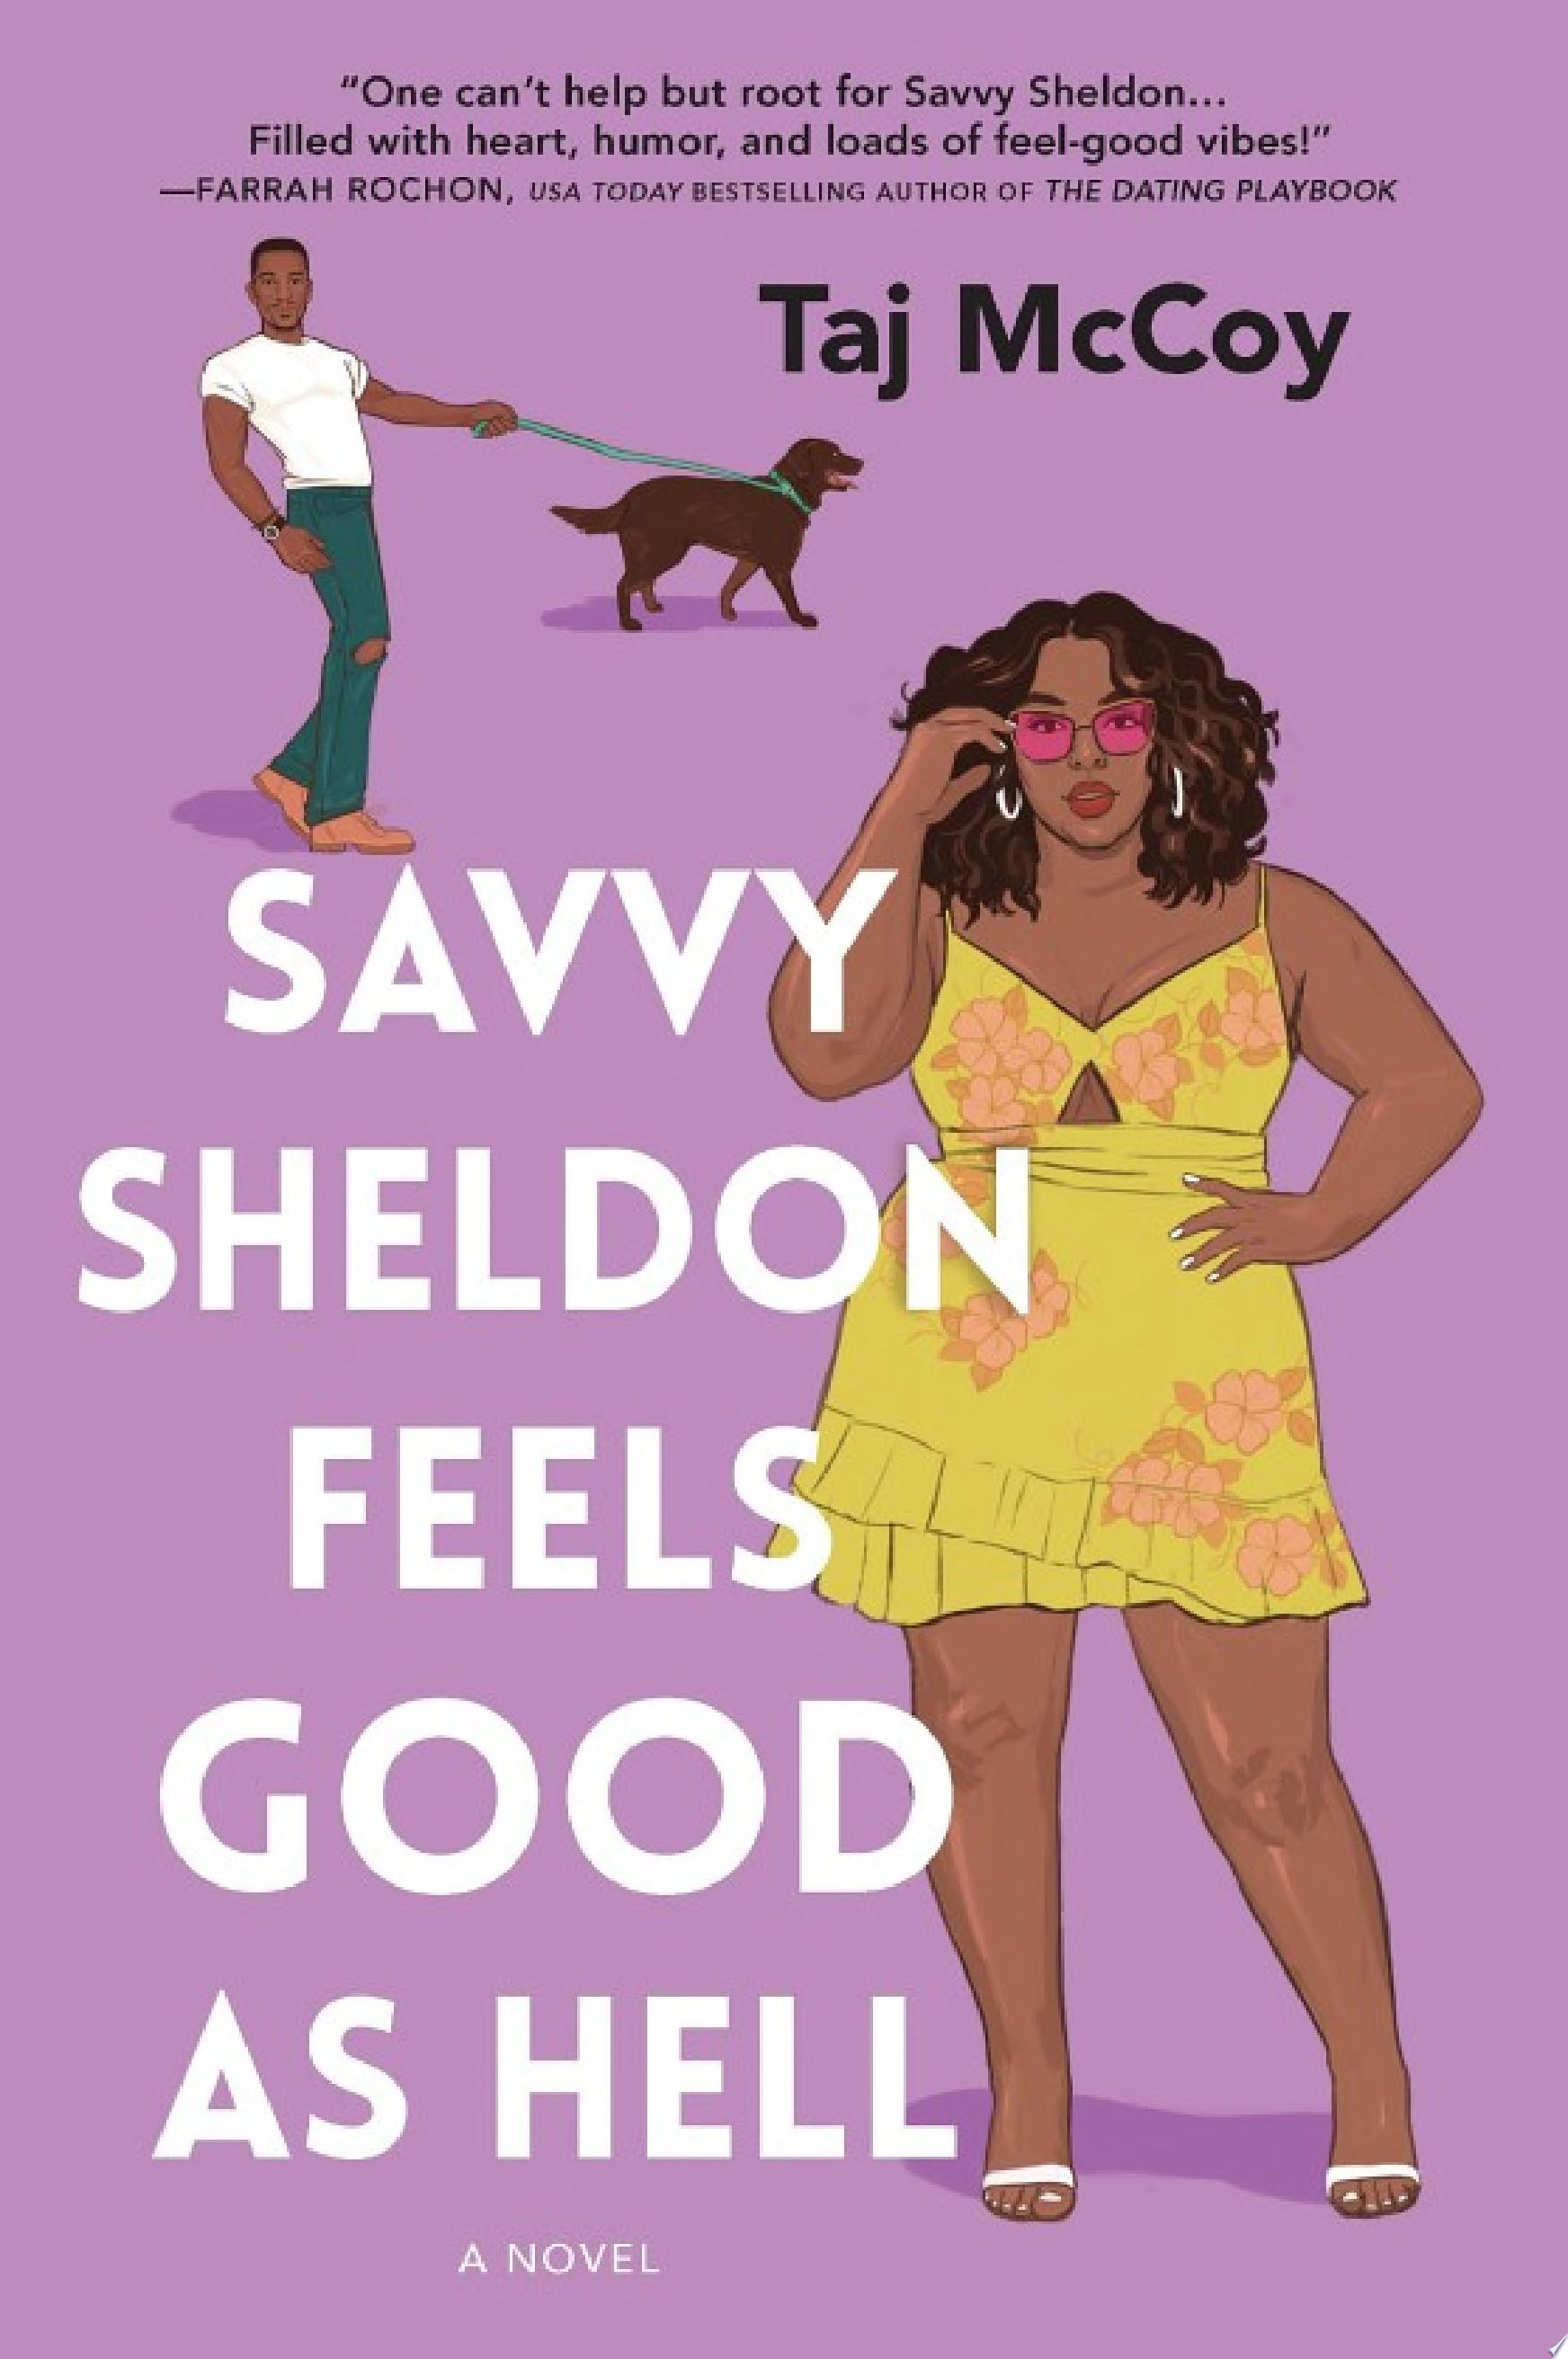 Image for "Savvy Sheldon Feels Good as Hell"